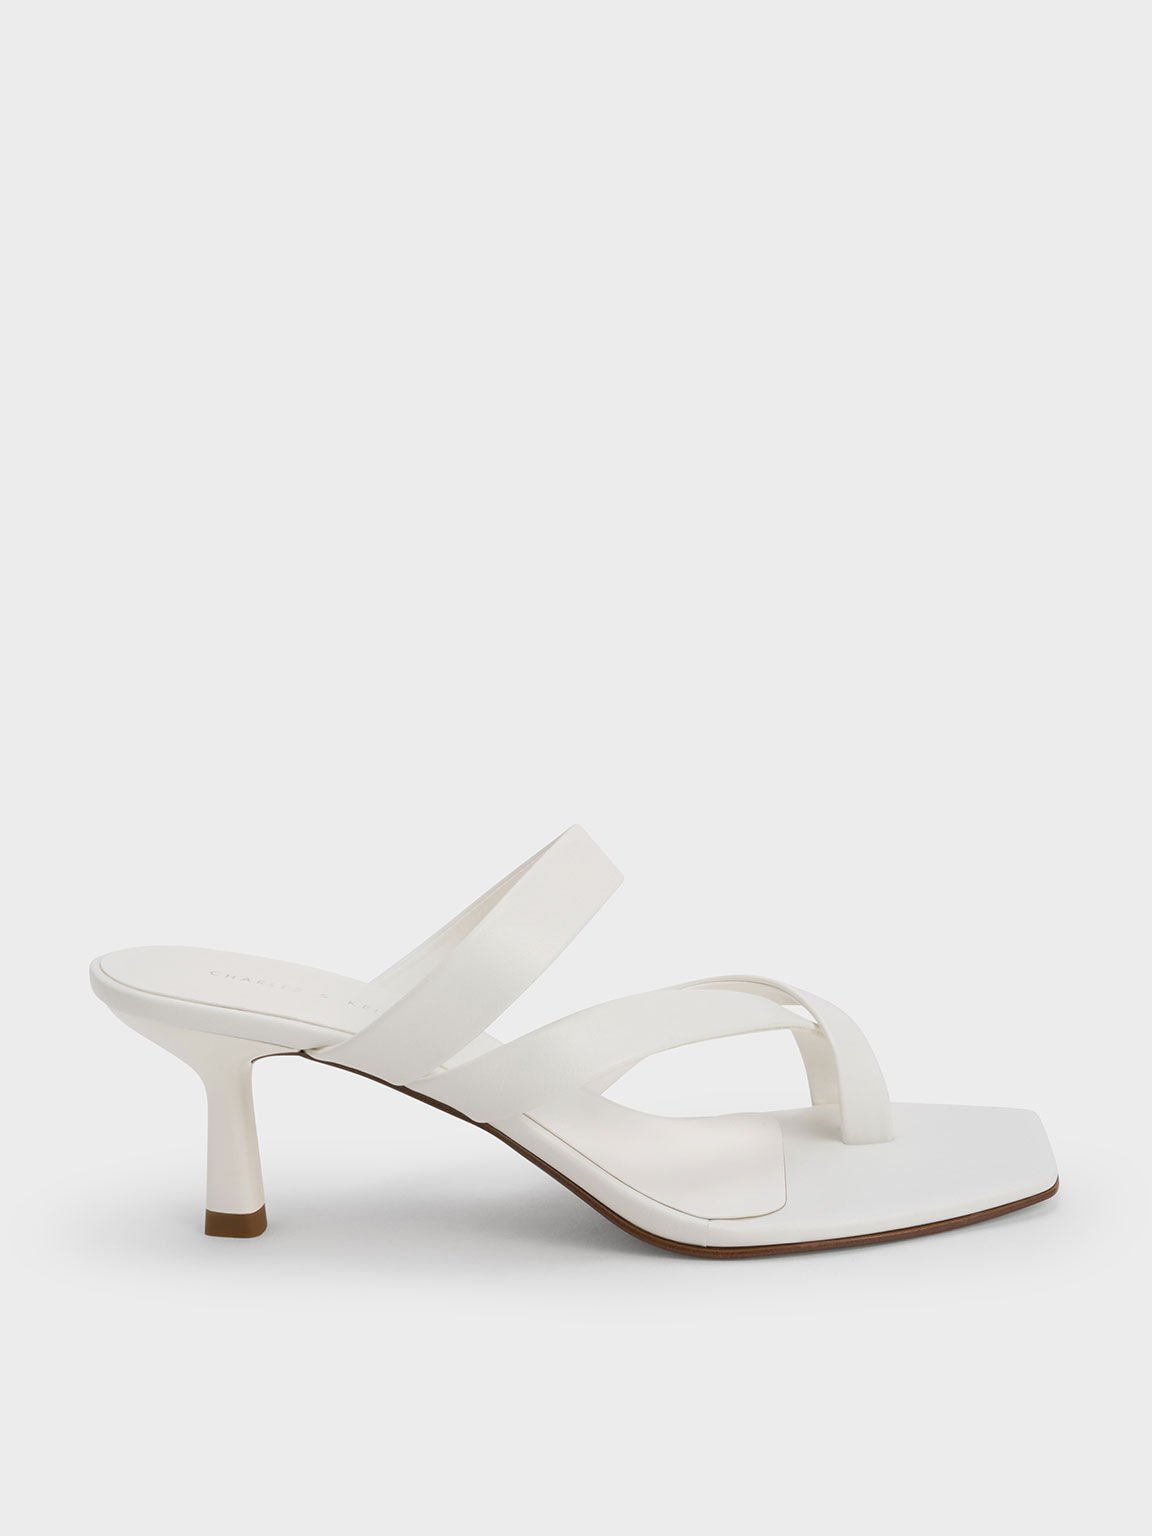 Sandal Heeled Toe Ring Textured Asymmetric, White, hi-res